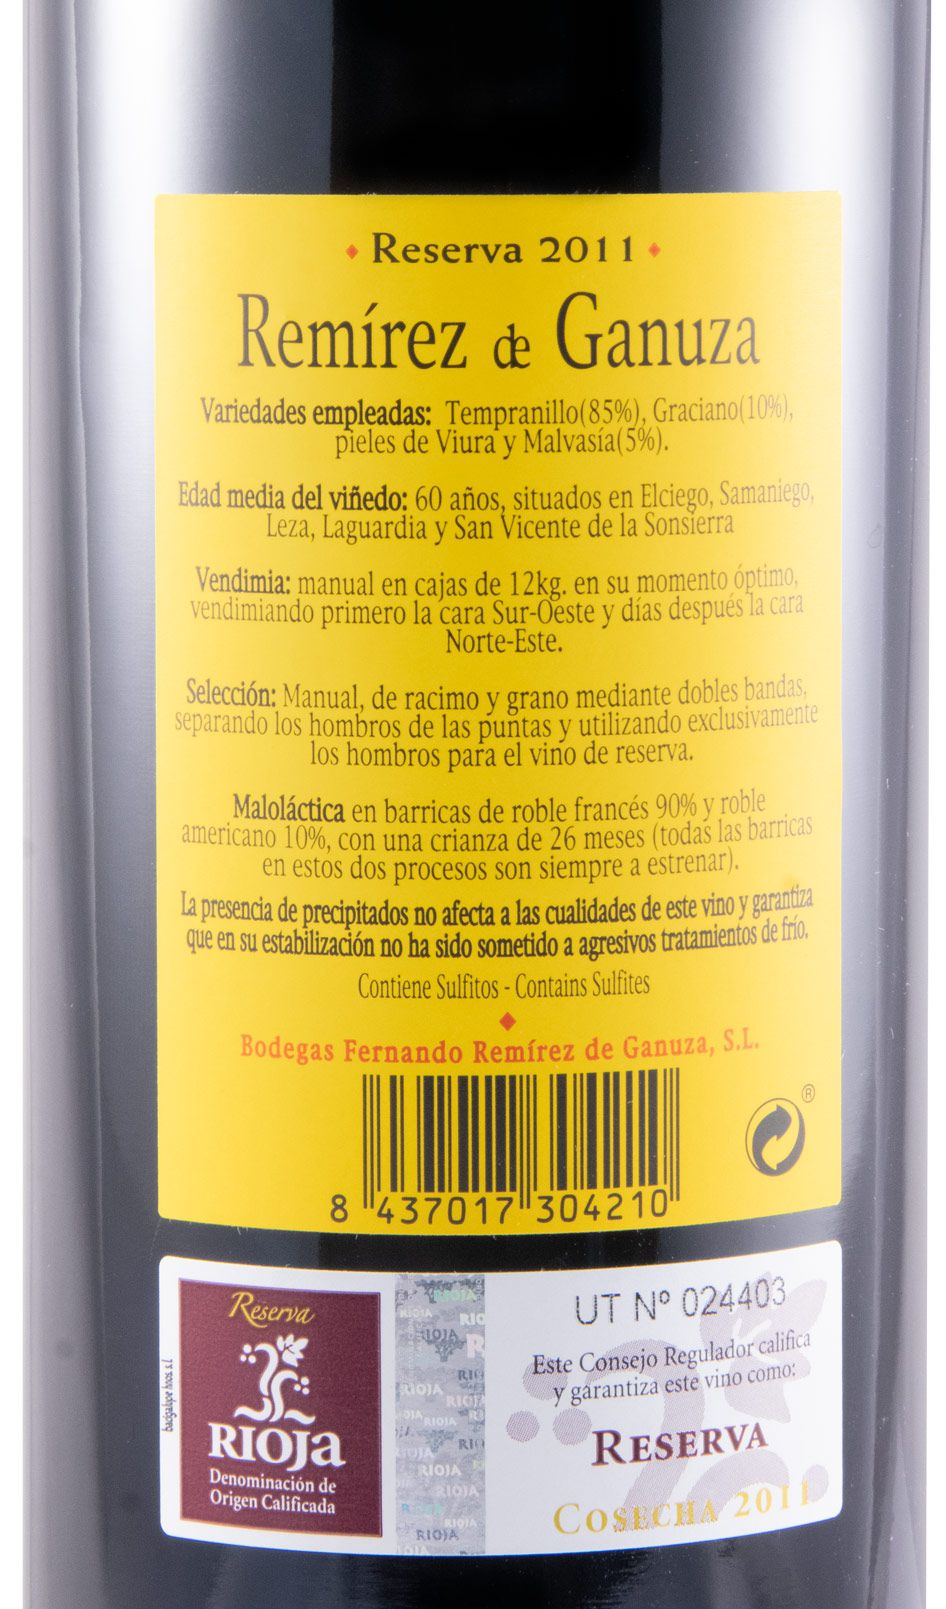 2011 Remírez de Ganuza Reserva Rioja red